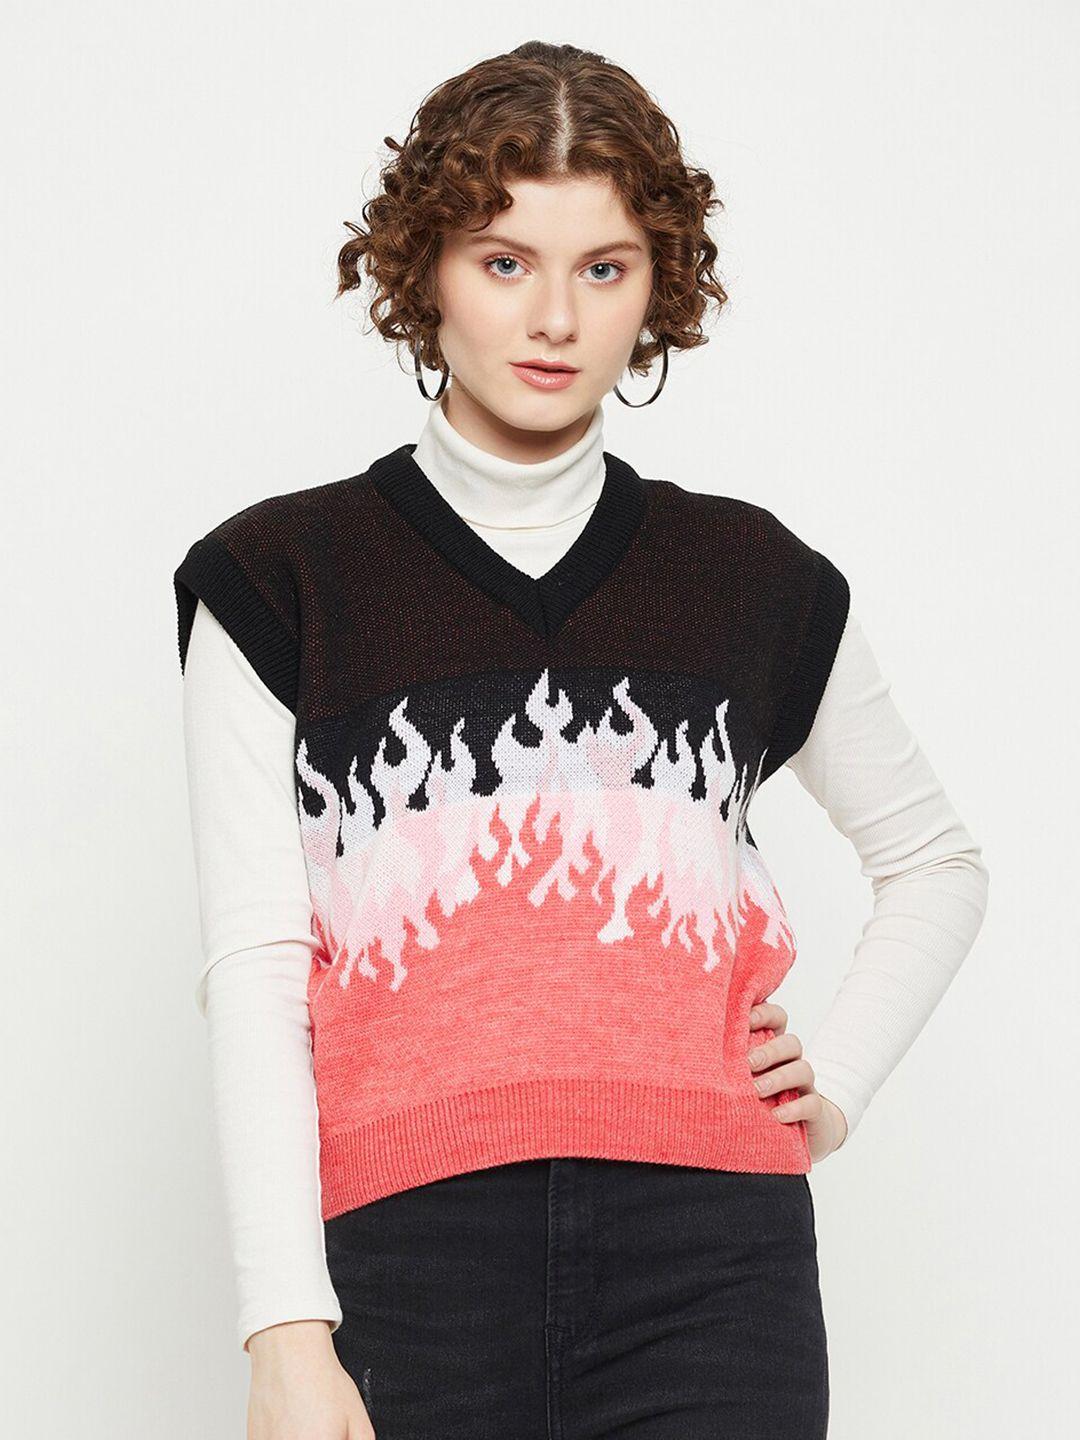 kasma-abstract-printed-woollen-sweater-vest